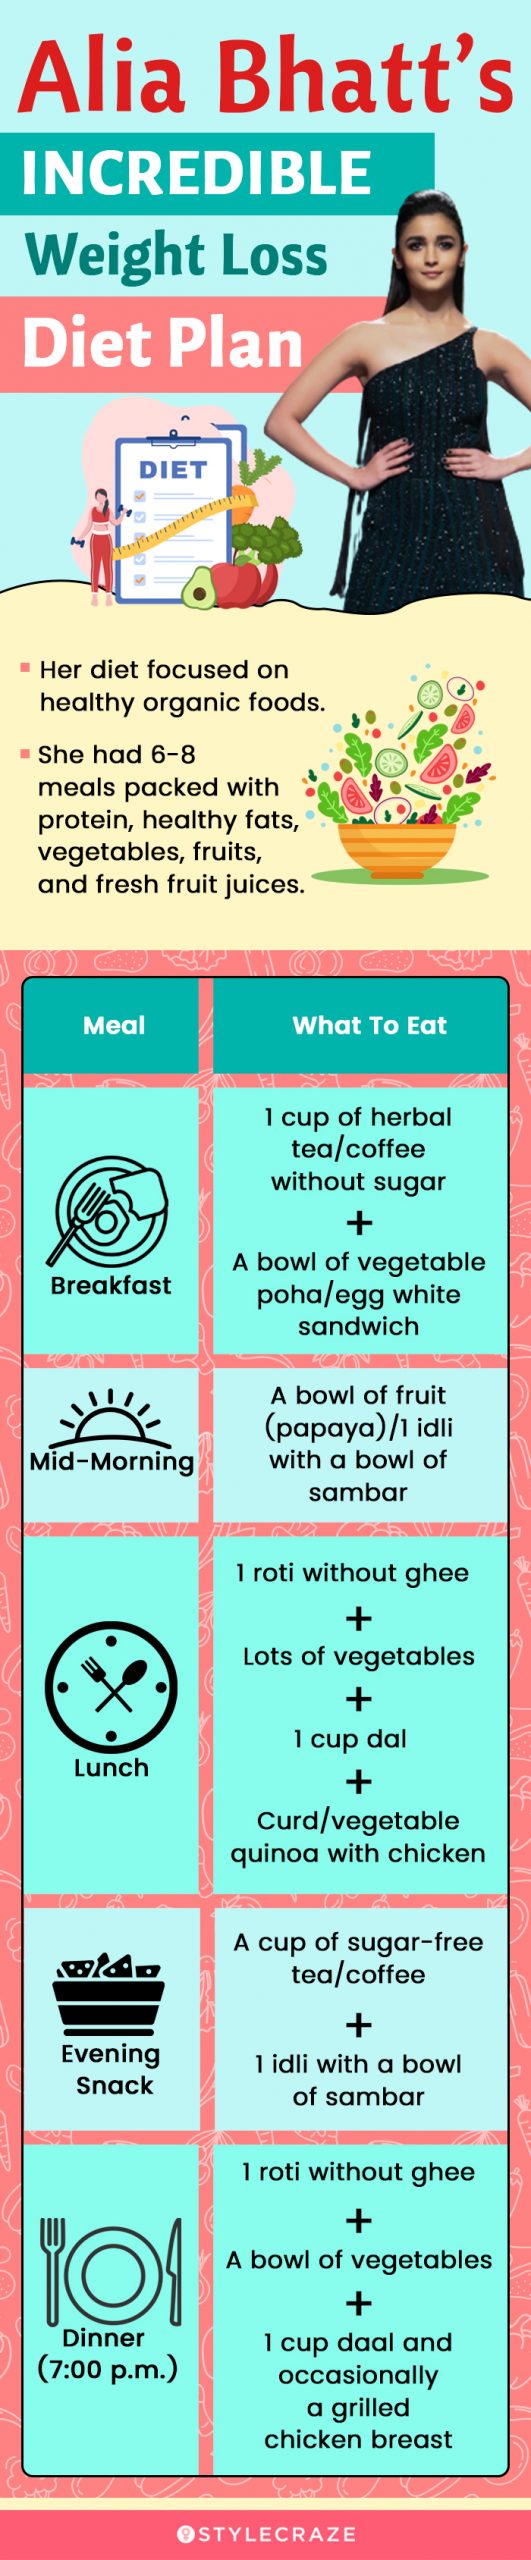 alia bhatt’s incredible weight loss diet plan [infographic]